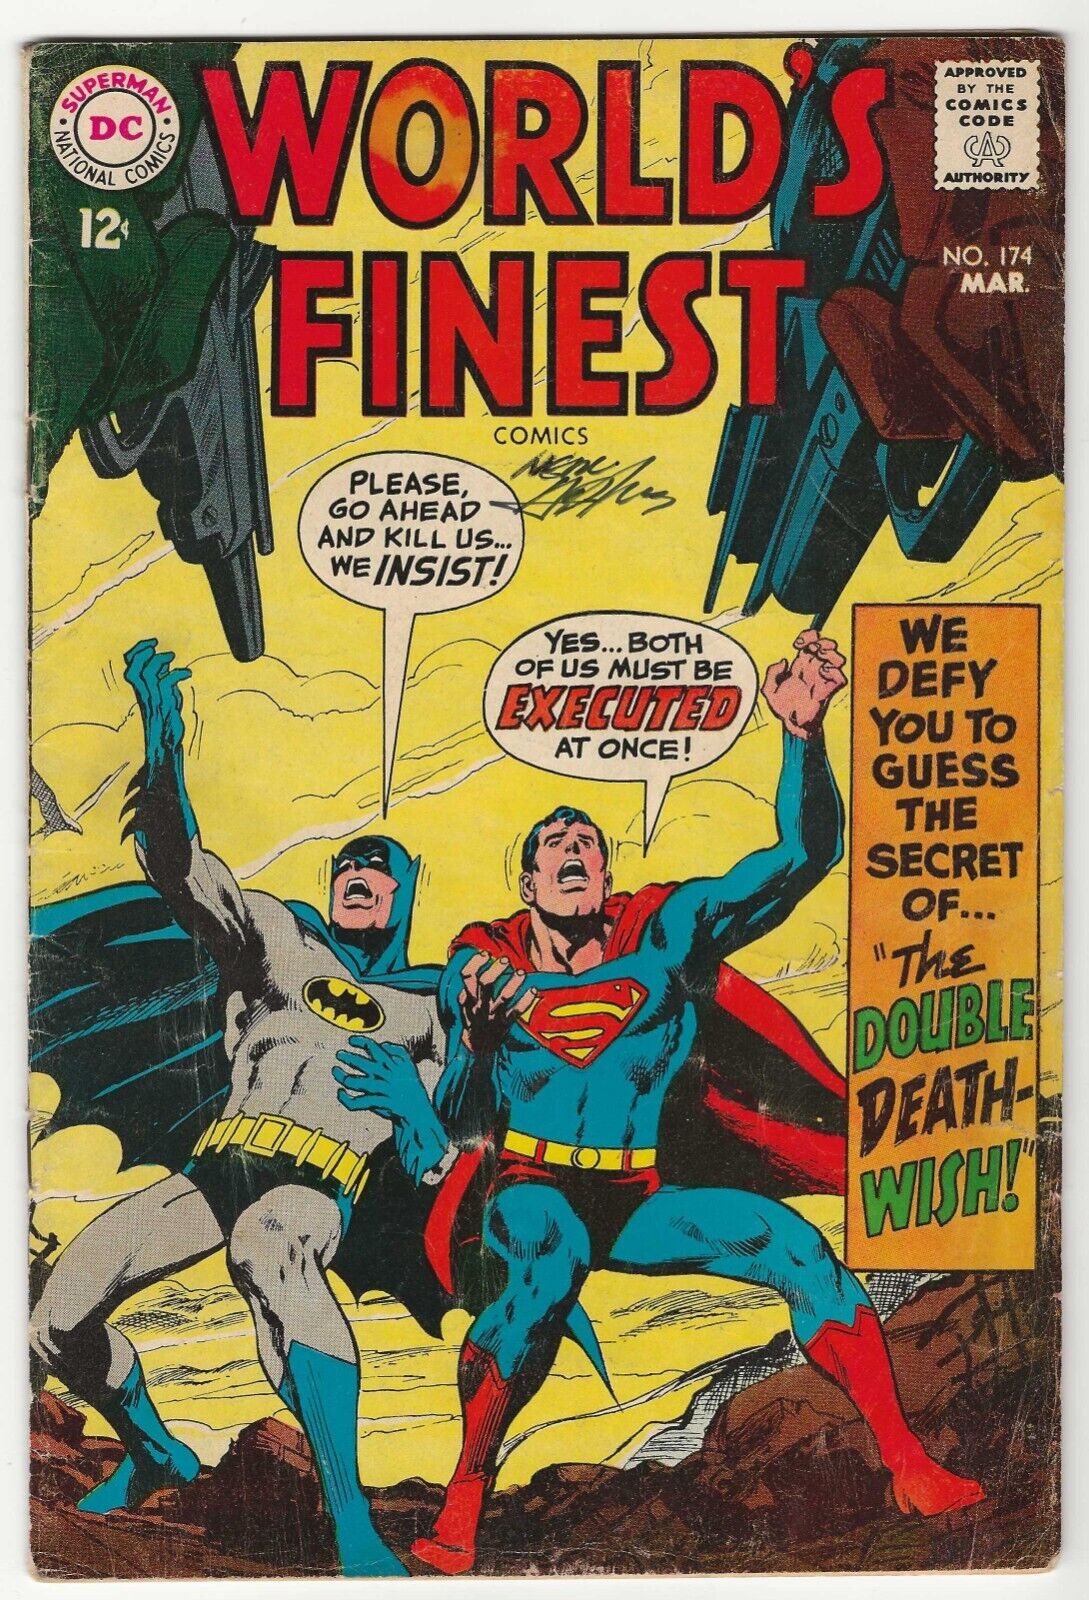 SIGNED 1968 WORLD\'S FINEST #174 VG   Neal Adams auto w/COA - Batman/Superman